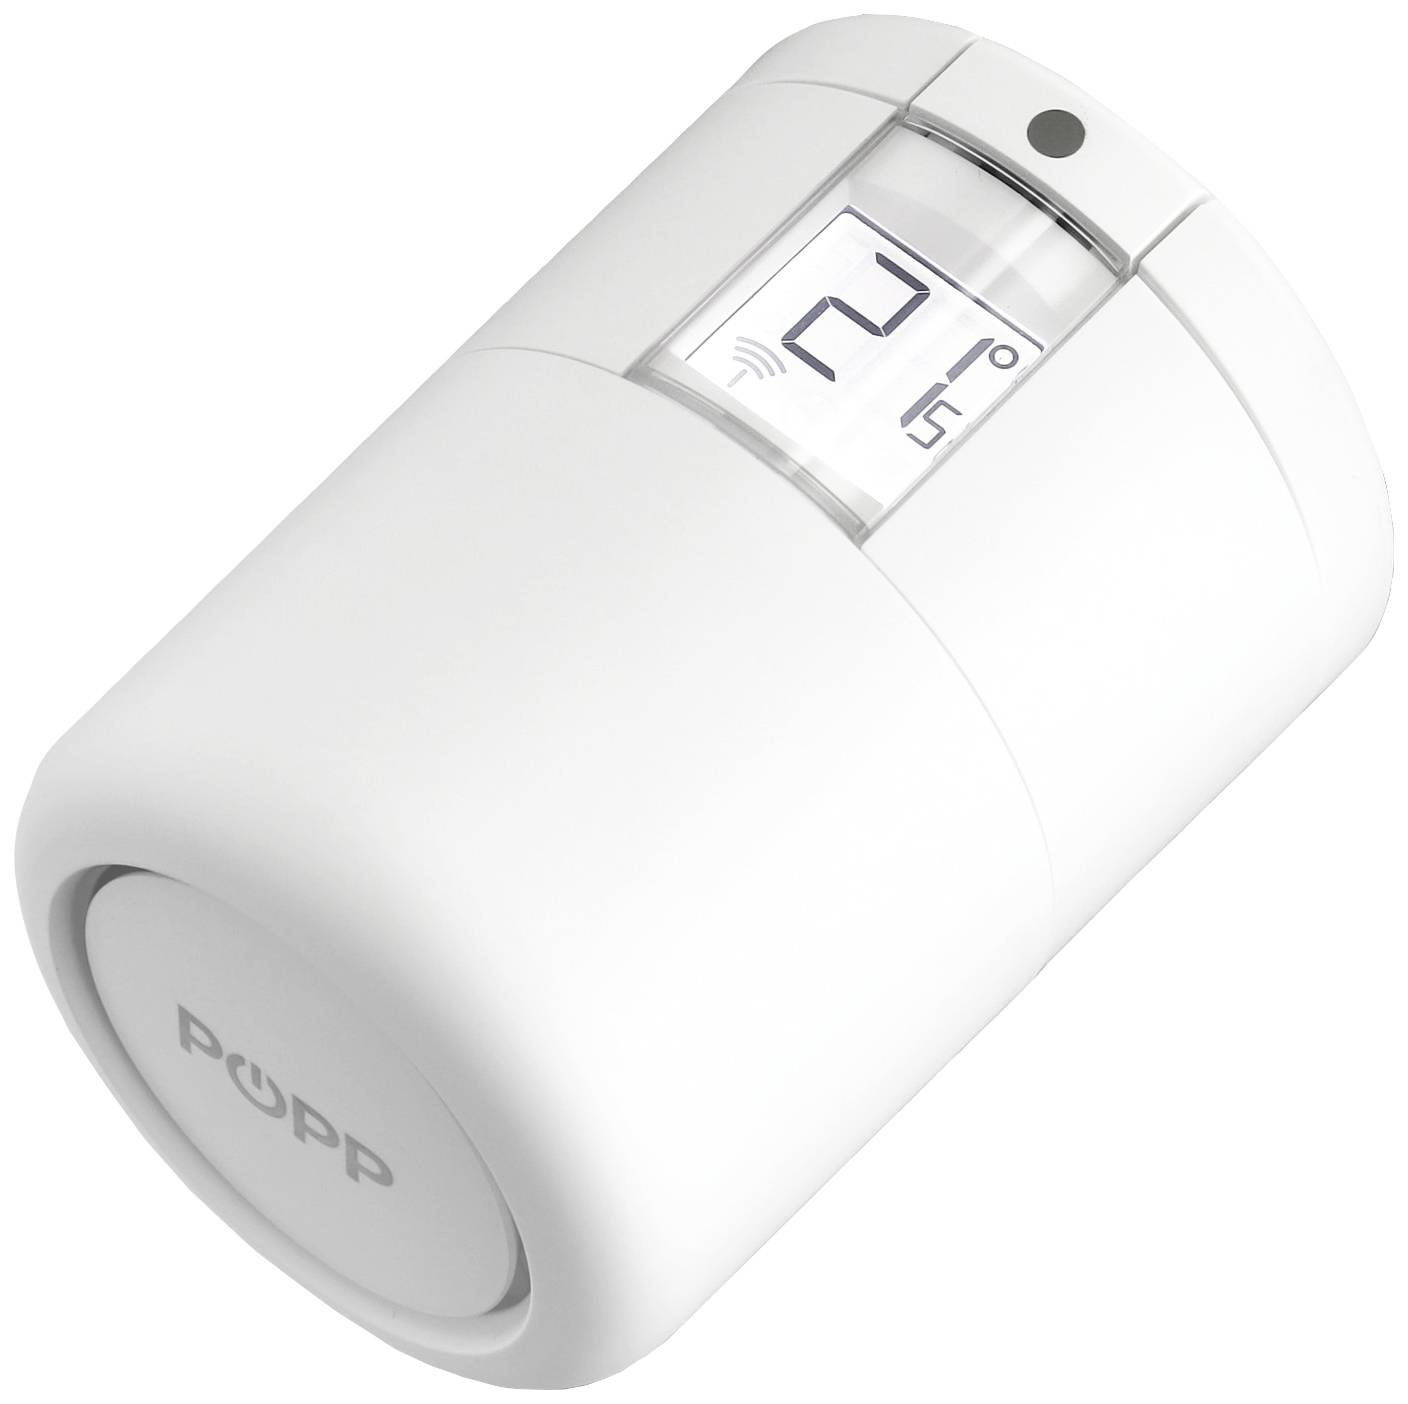 POPP Smart Thermostat